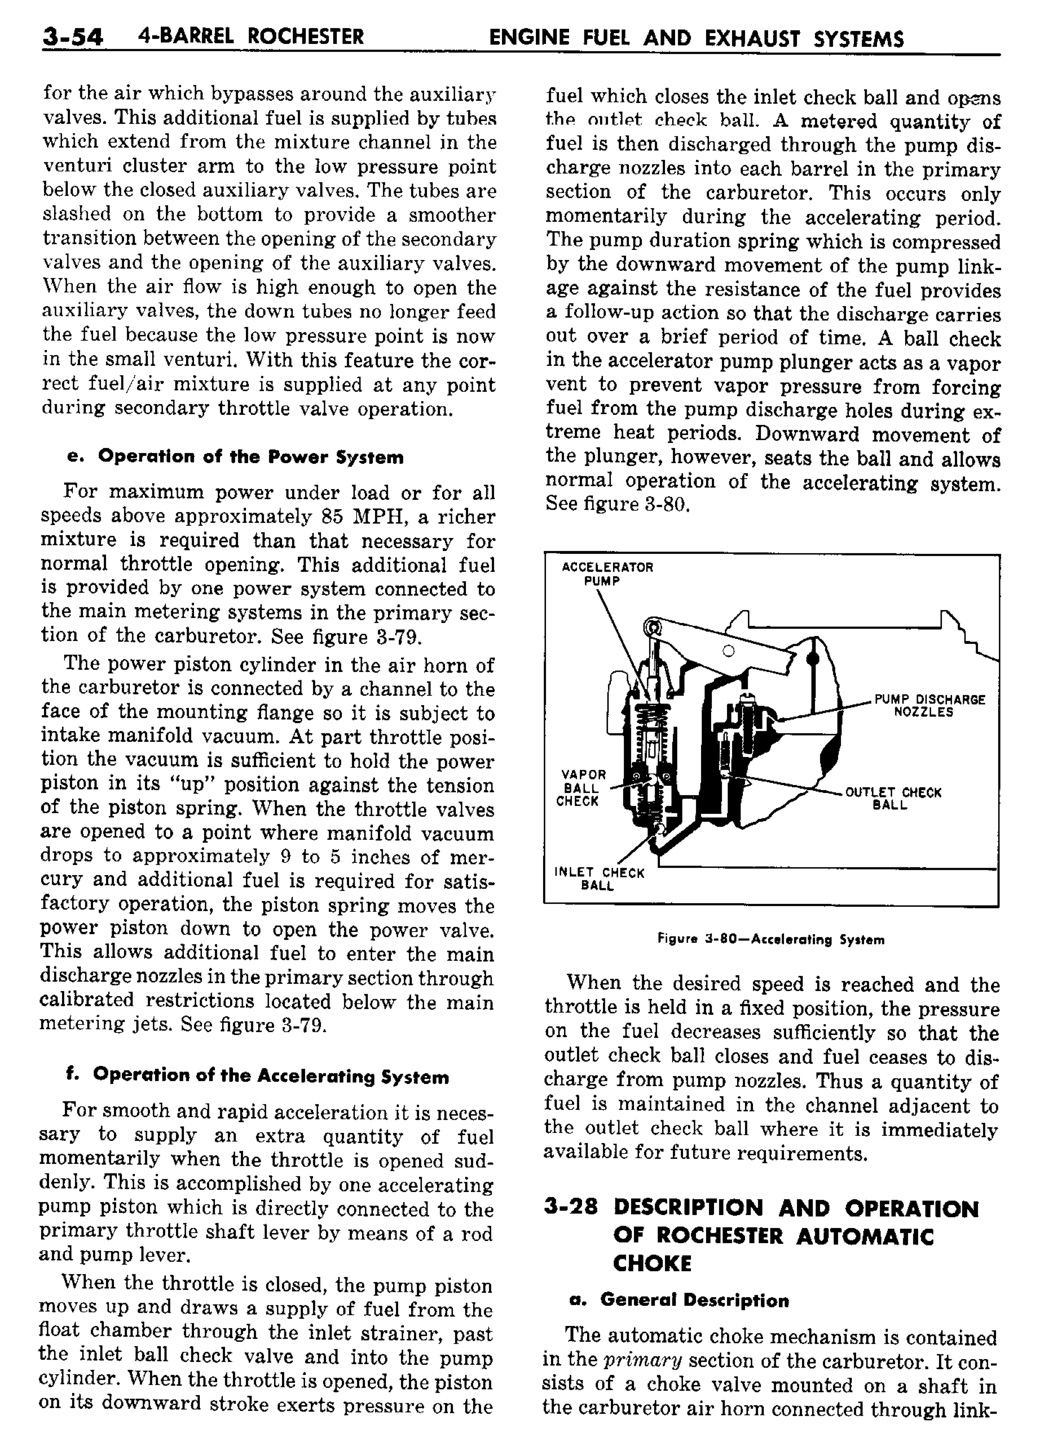 n_04 1960 Buick Shop Manual - Engine Fuel & Exhaust-054-054.jpg